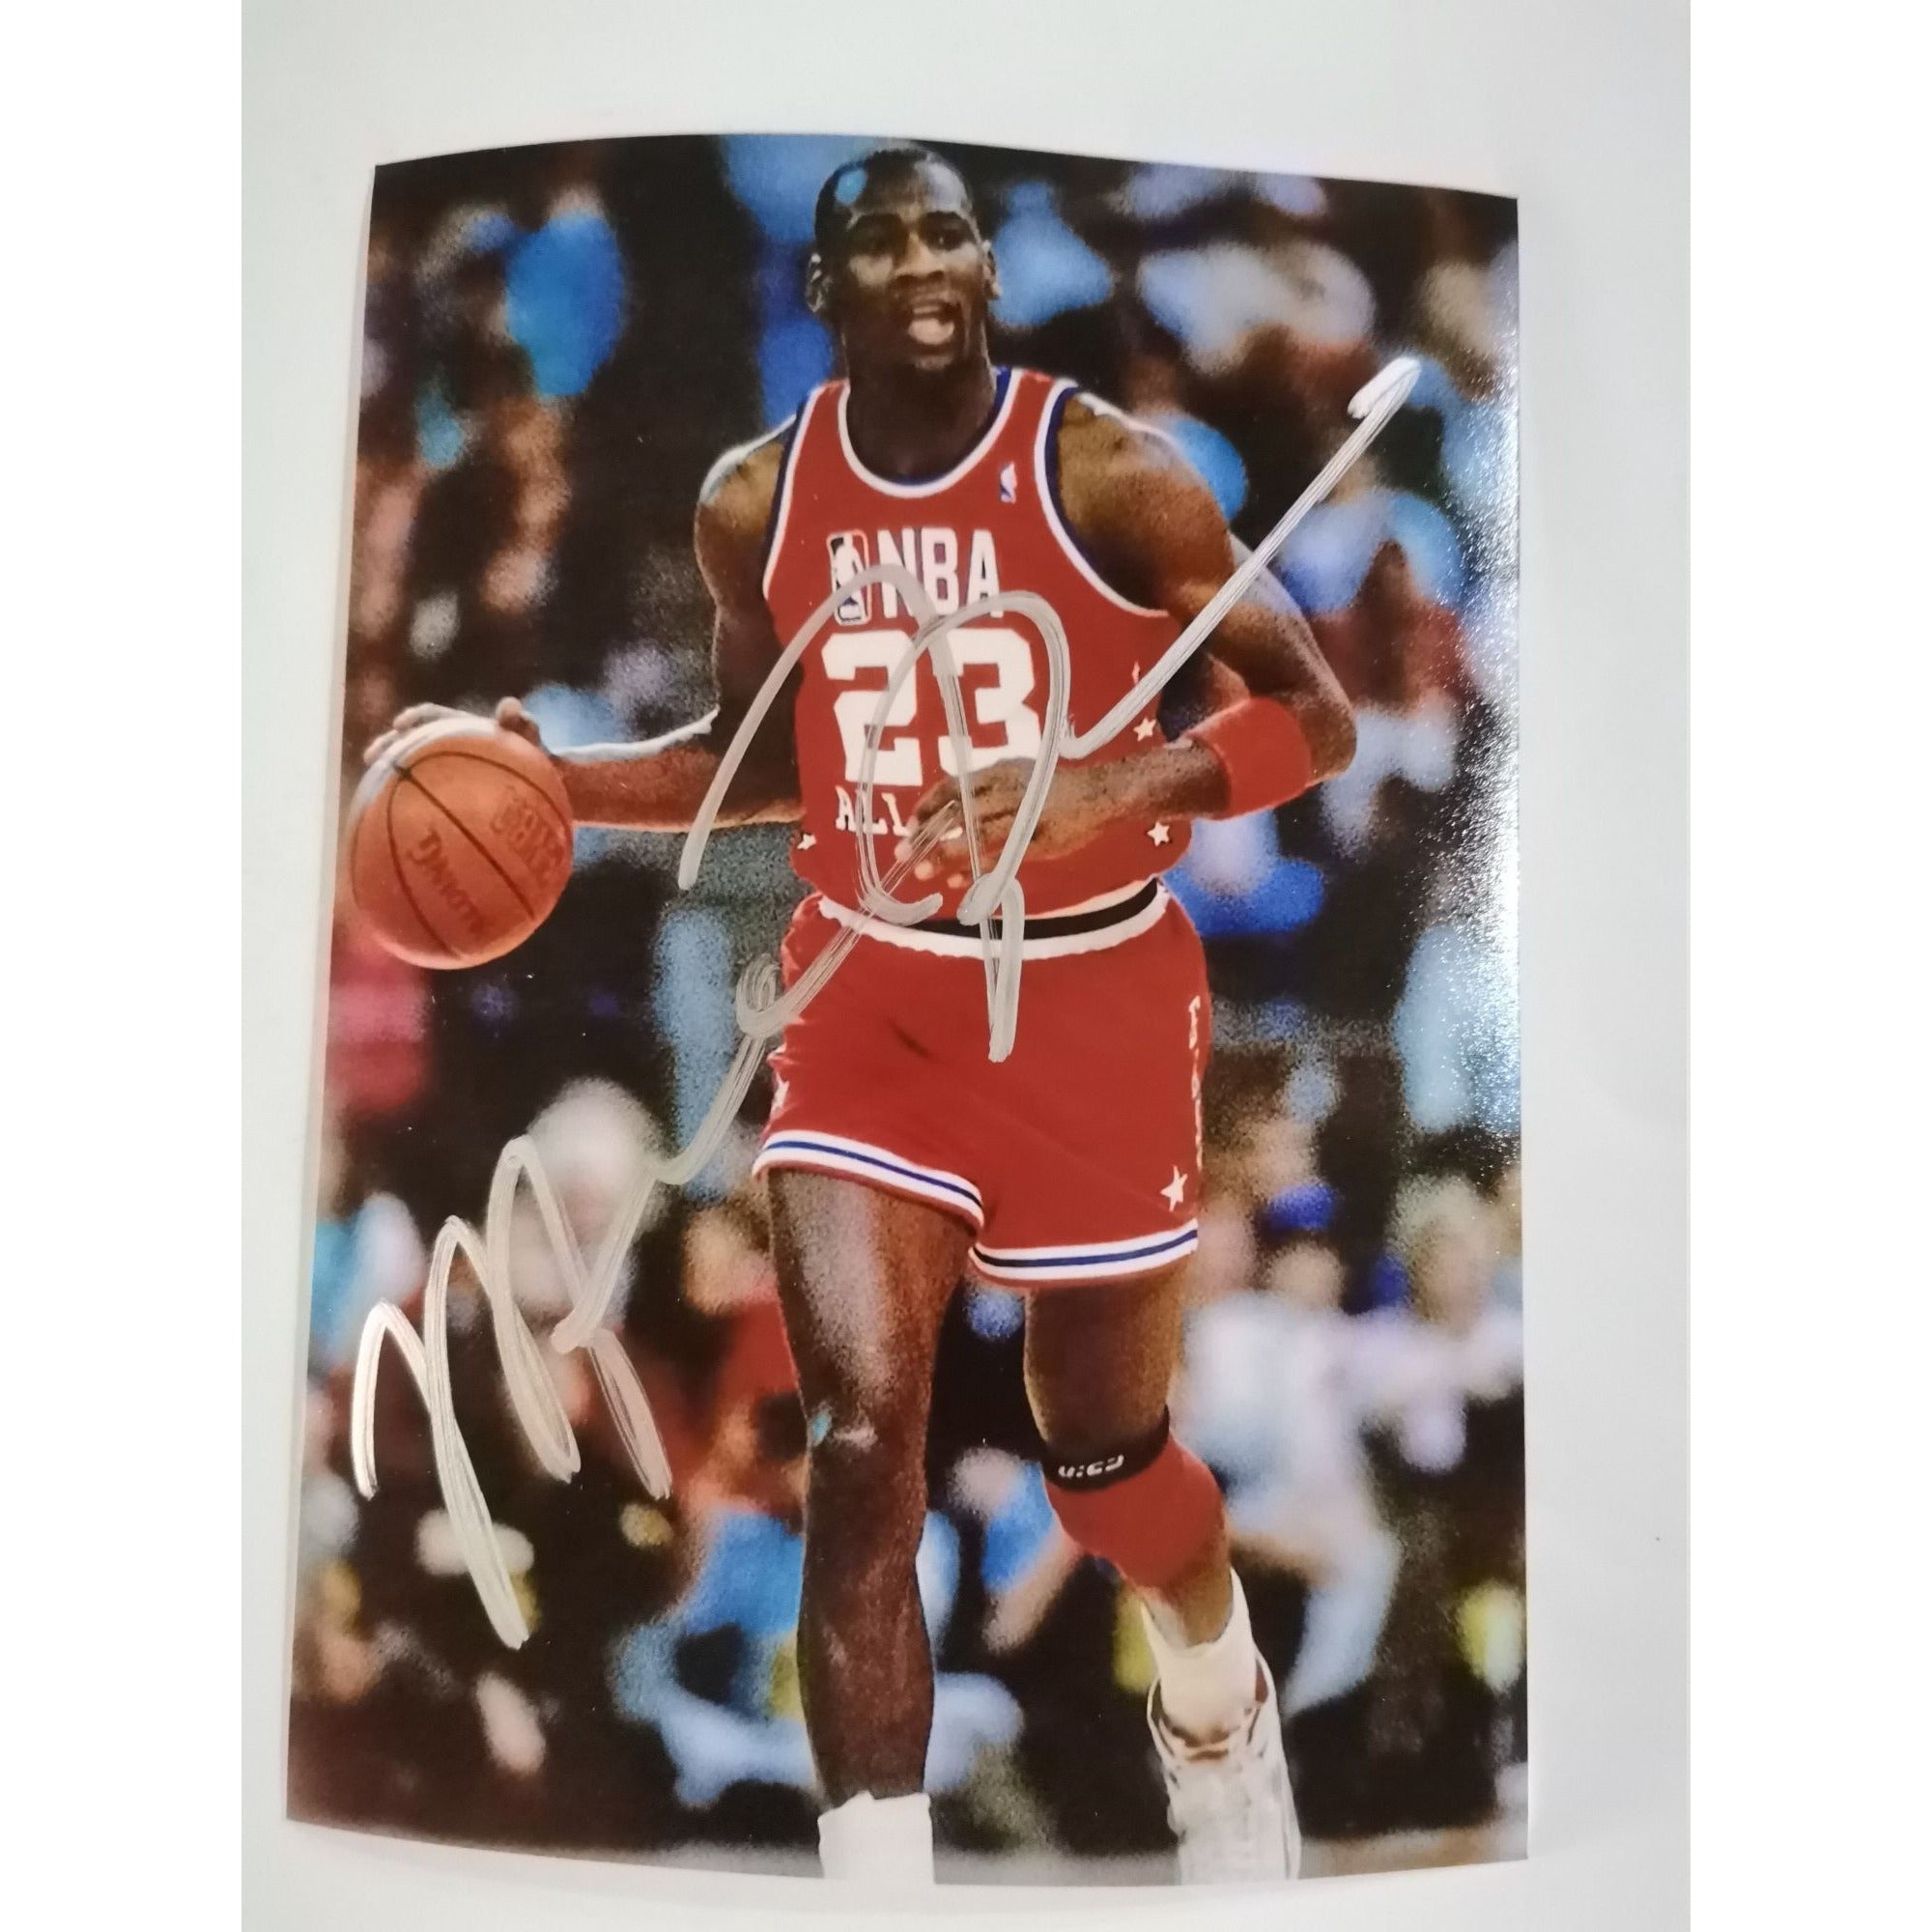 Michael Jordan Chicago Bulls 5 x 7 photo signed with proof